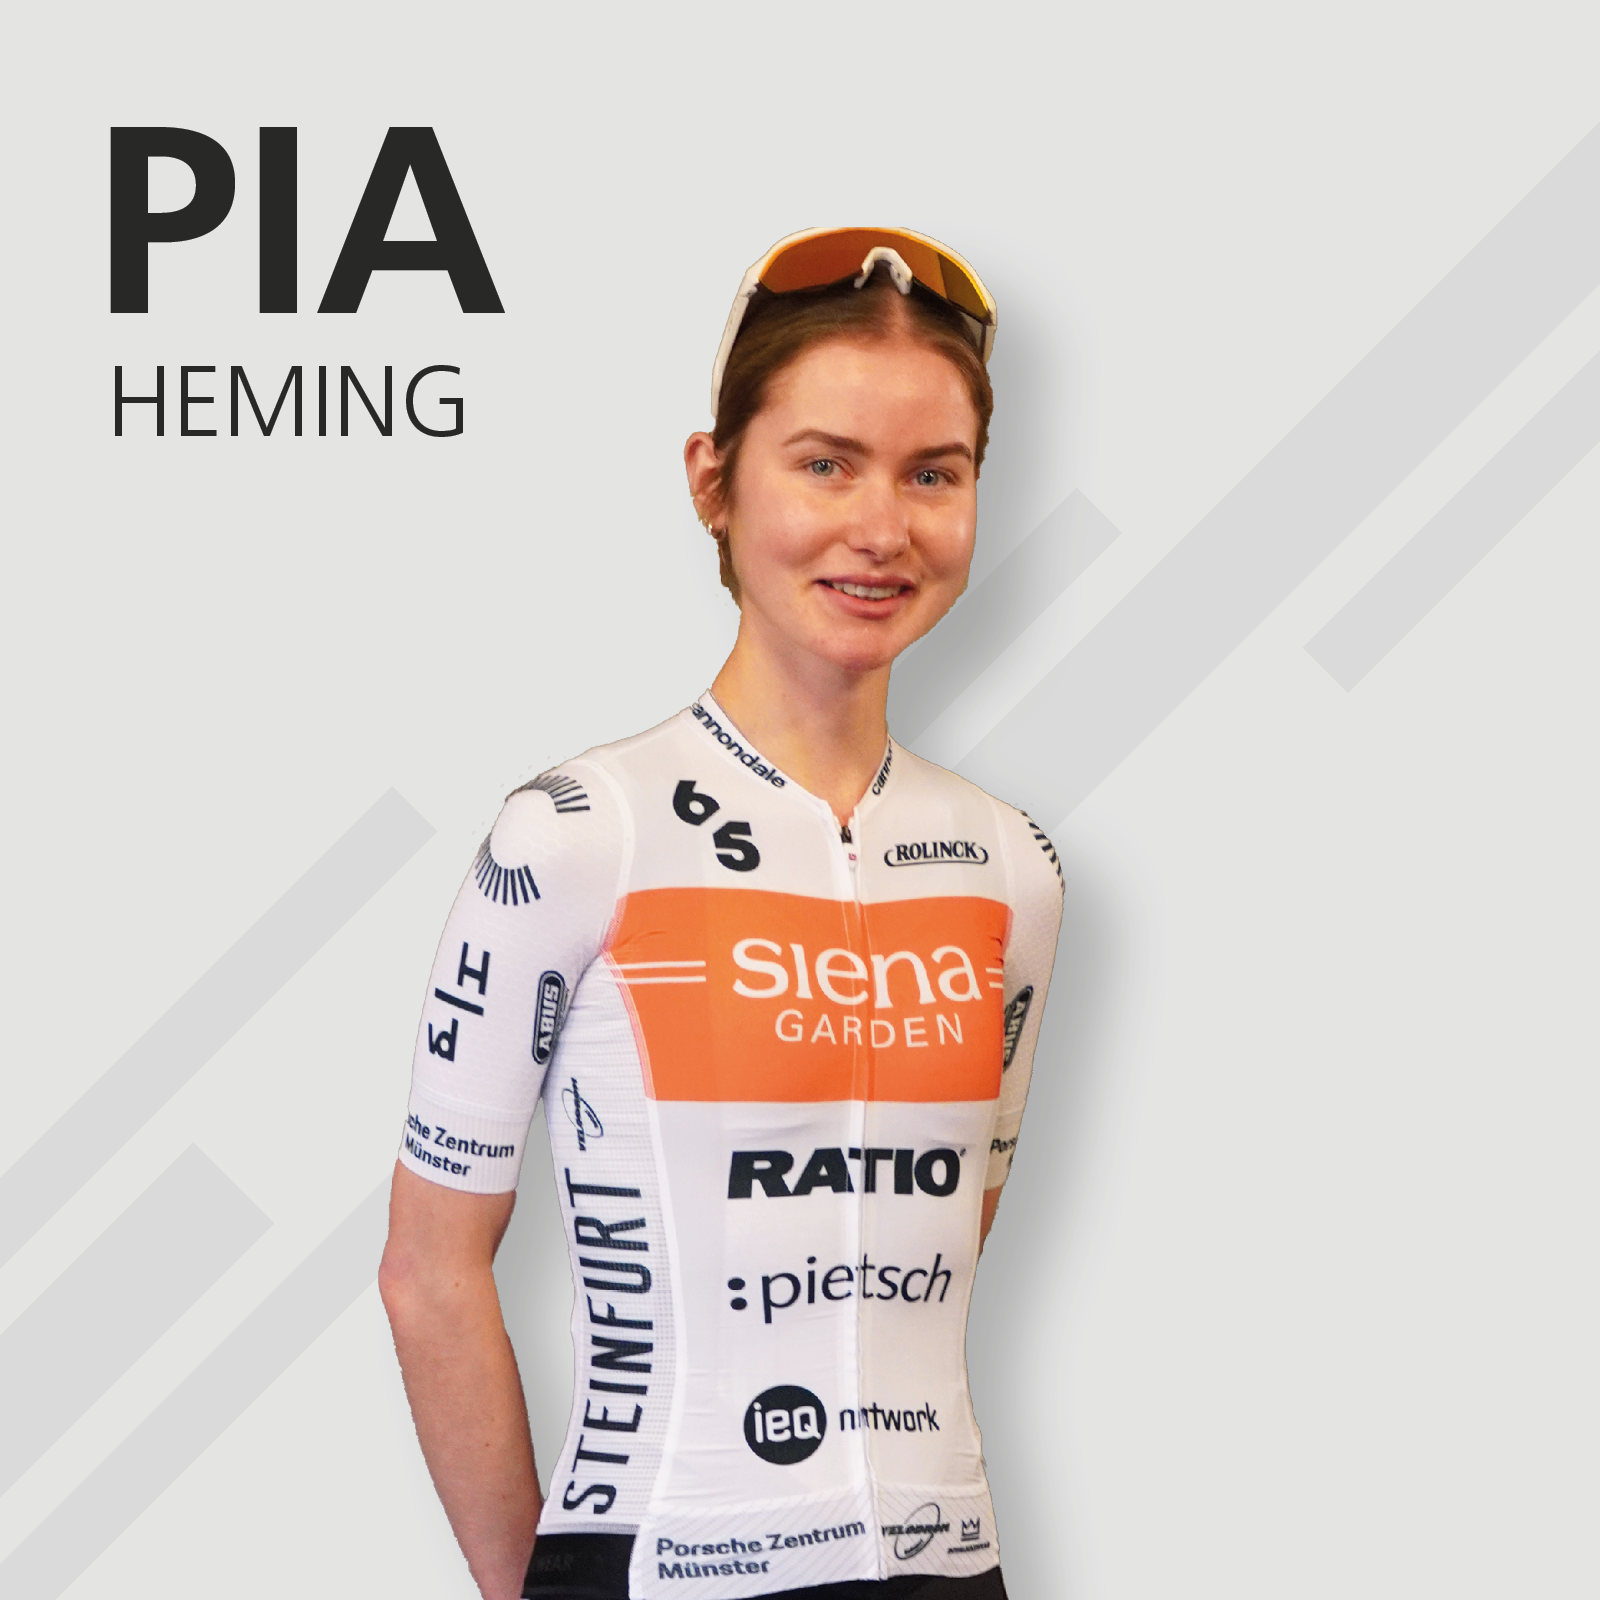 Pia Heming Siena Garden Racing Fahrerin mit Trikot